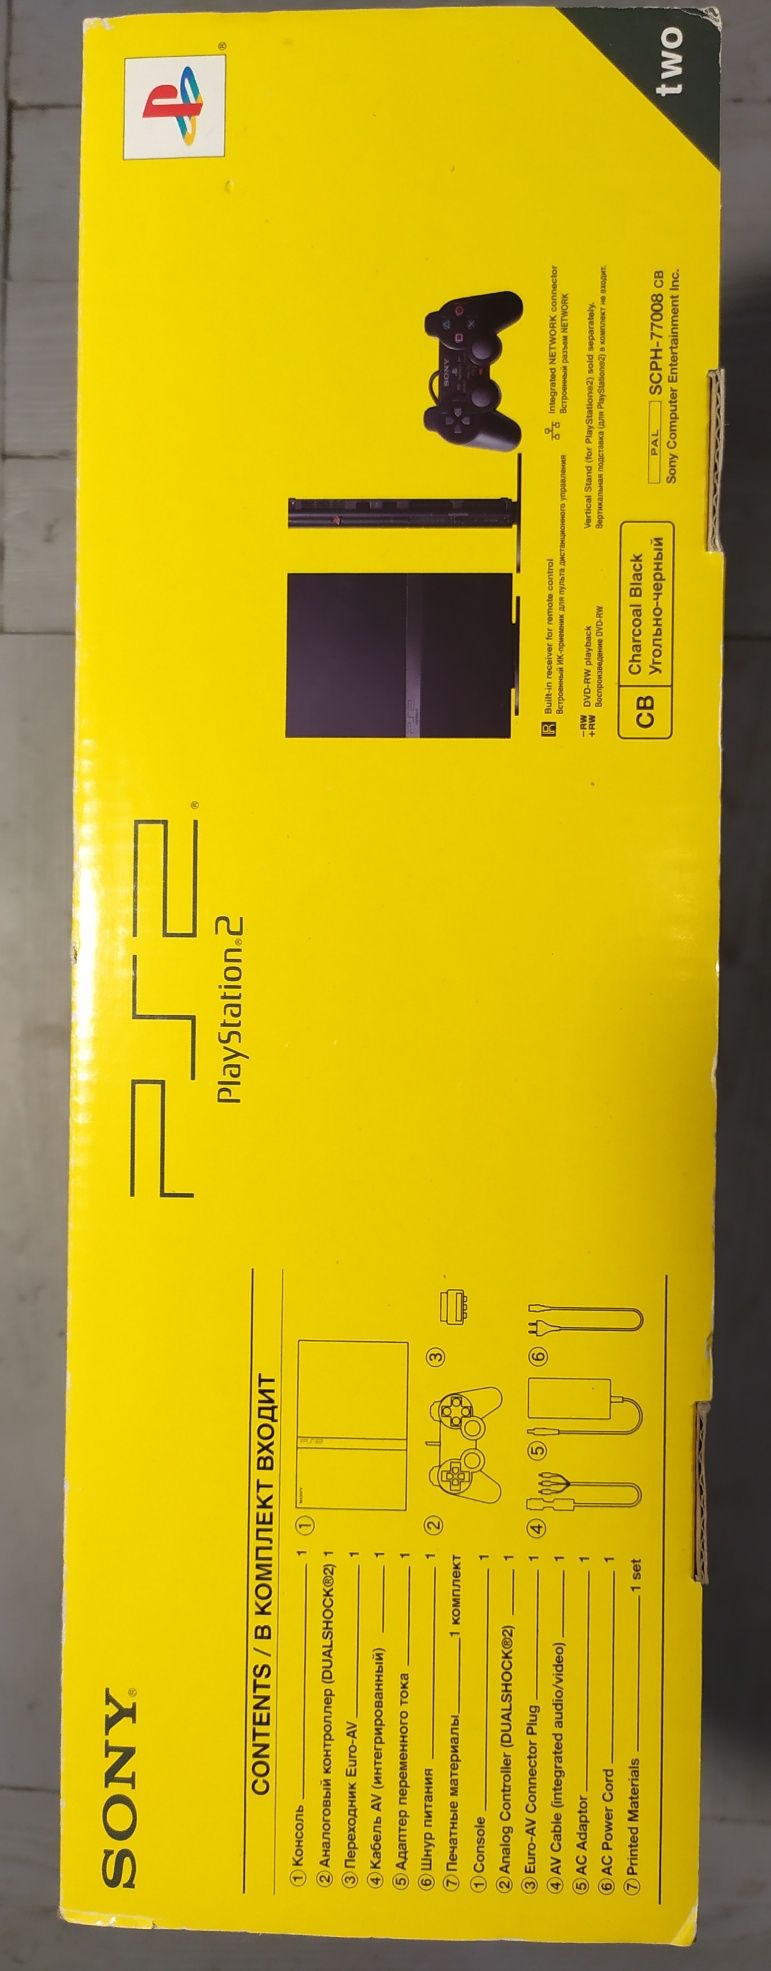 Кробка от Sony Playstation 2